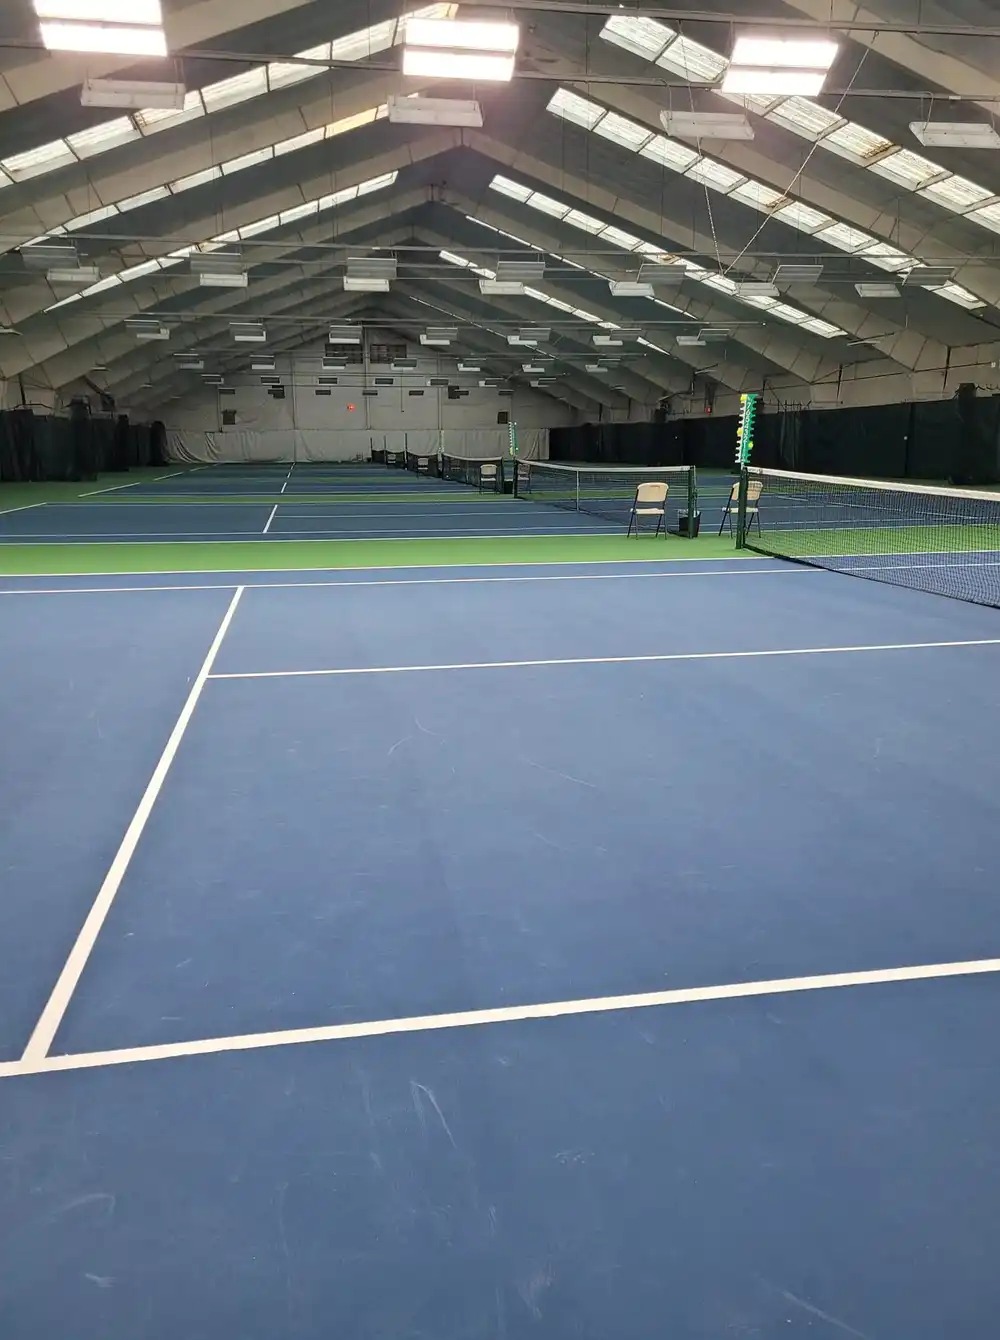 Glastonbury Tennis Club